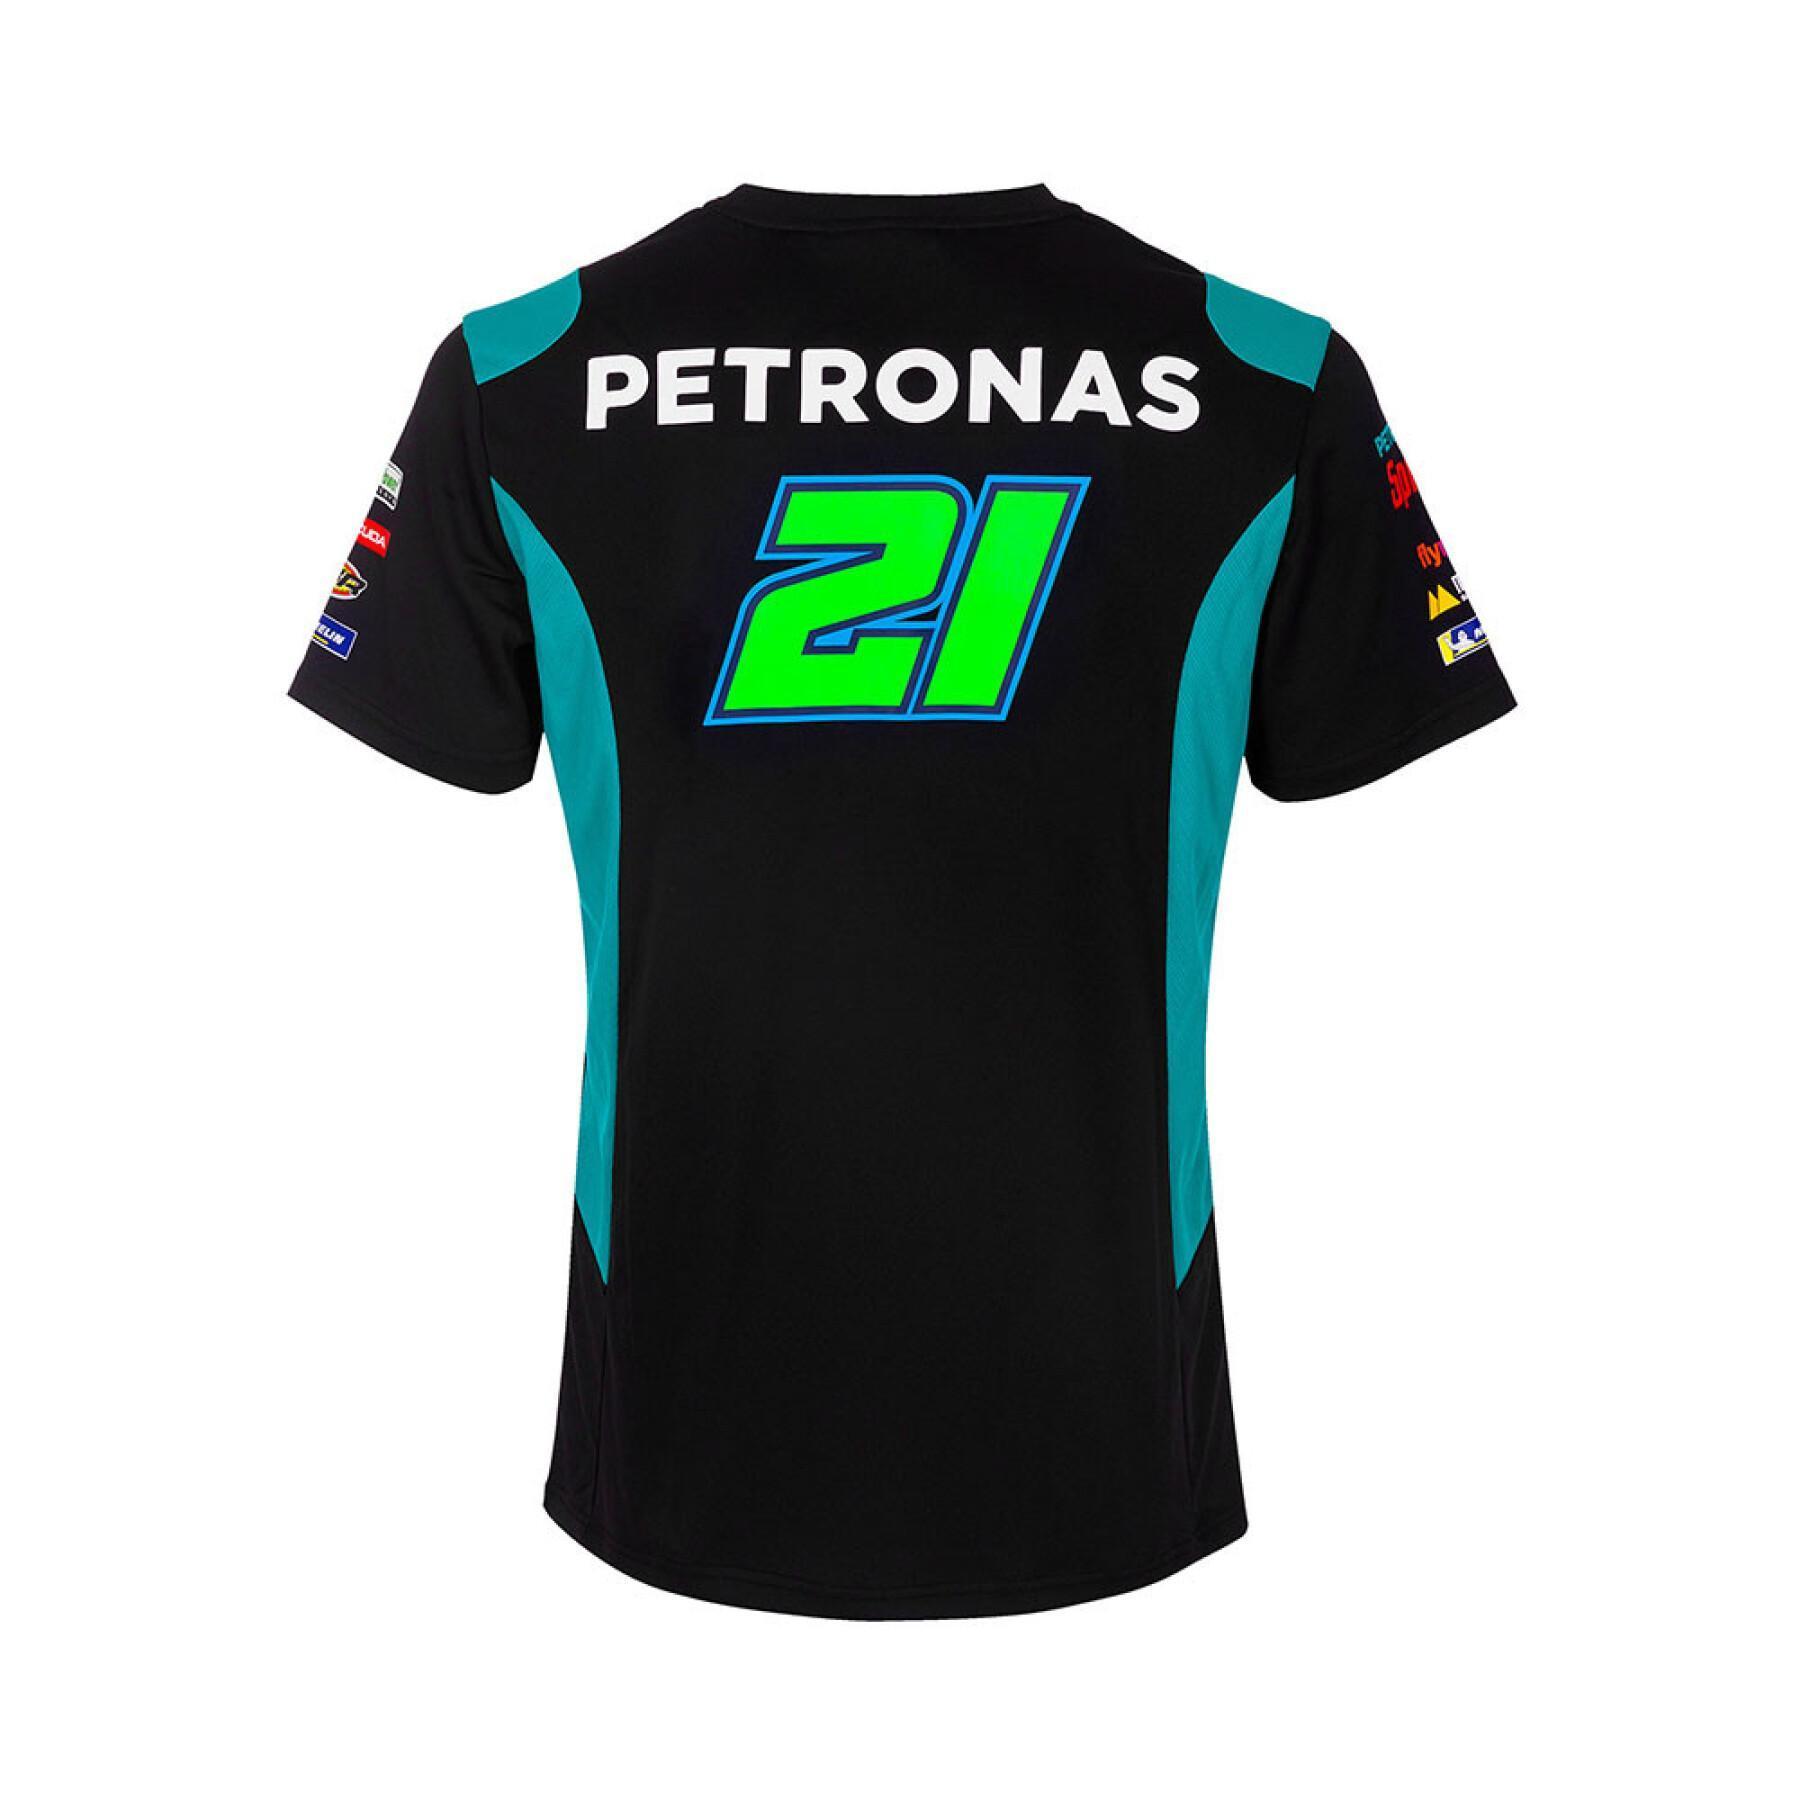 Koszulka VRl46 Petronas morbidelli